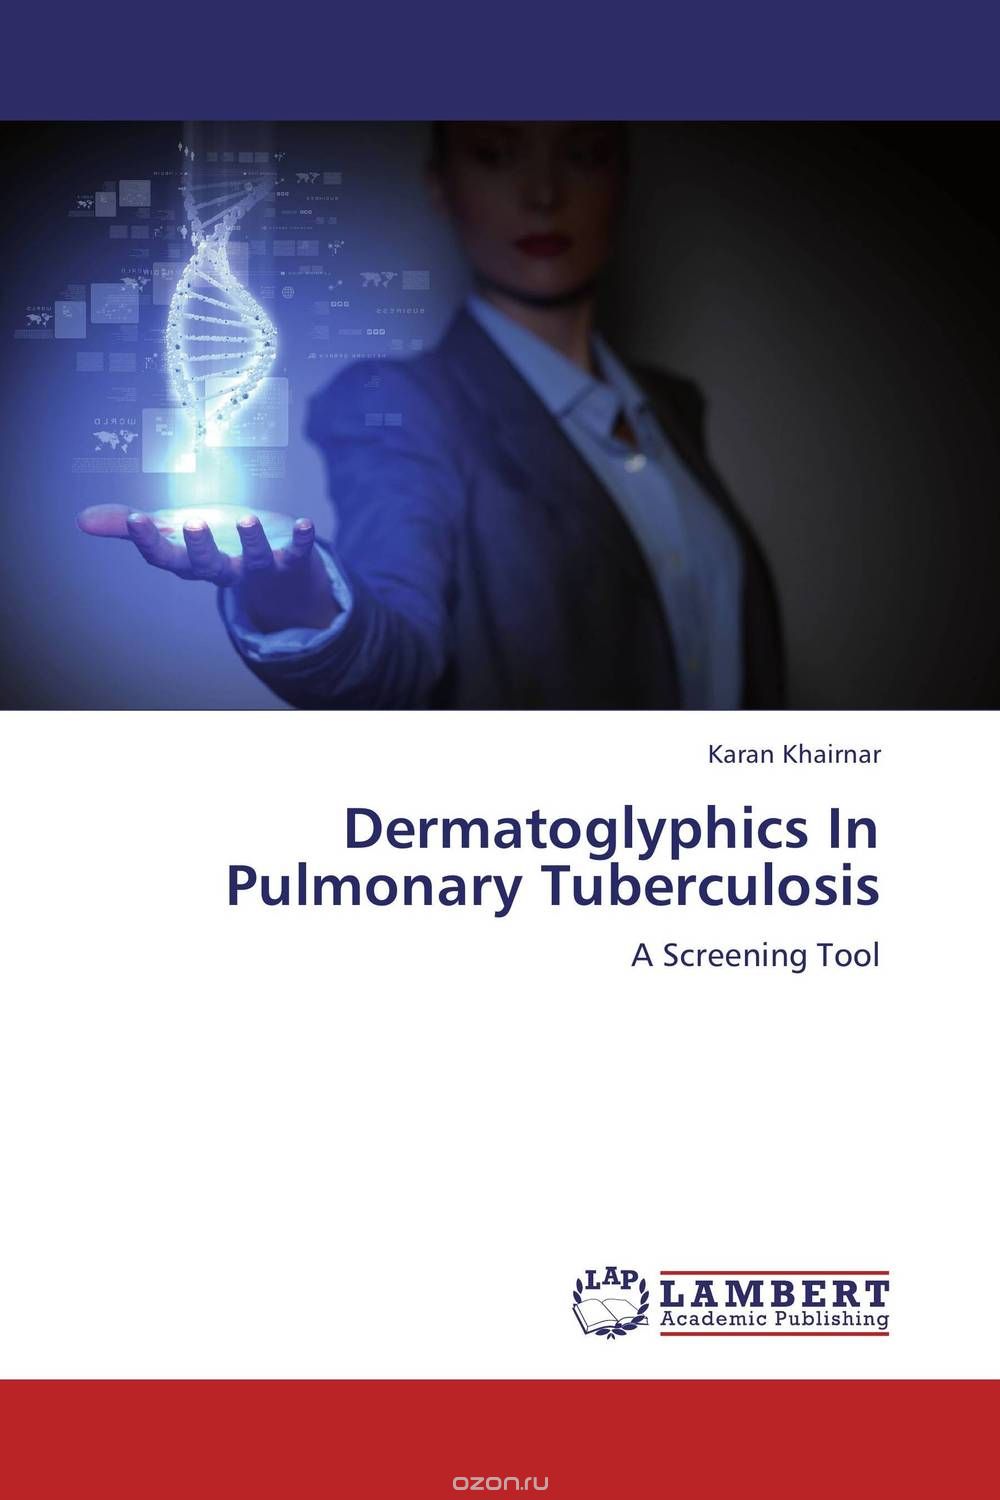 Скачать книгу "Dermatoglyphics In Pulmonary Tuberculosis"